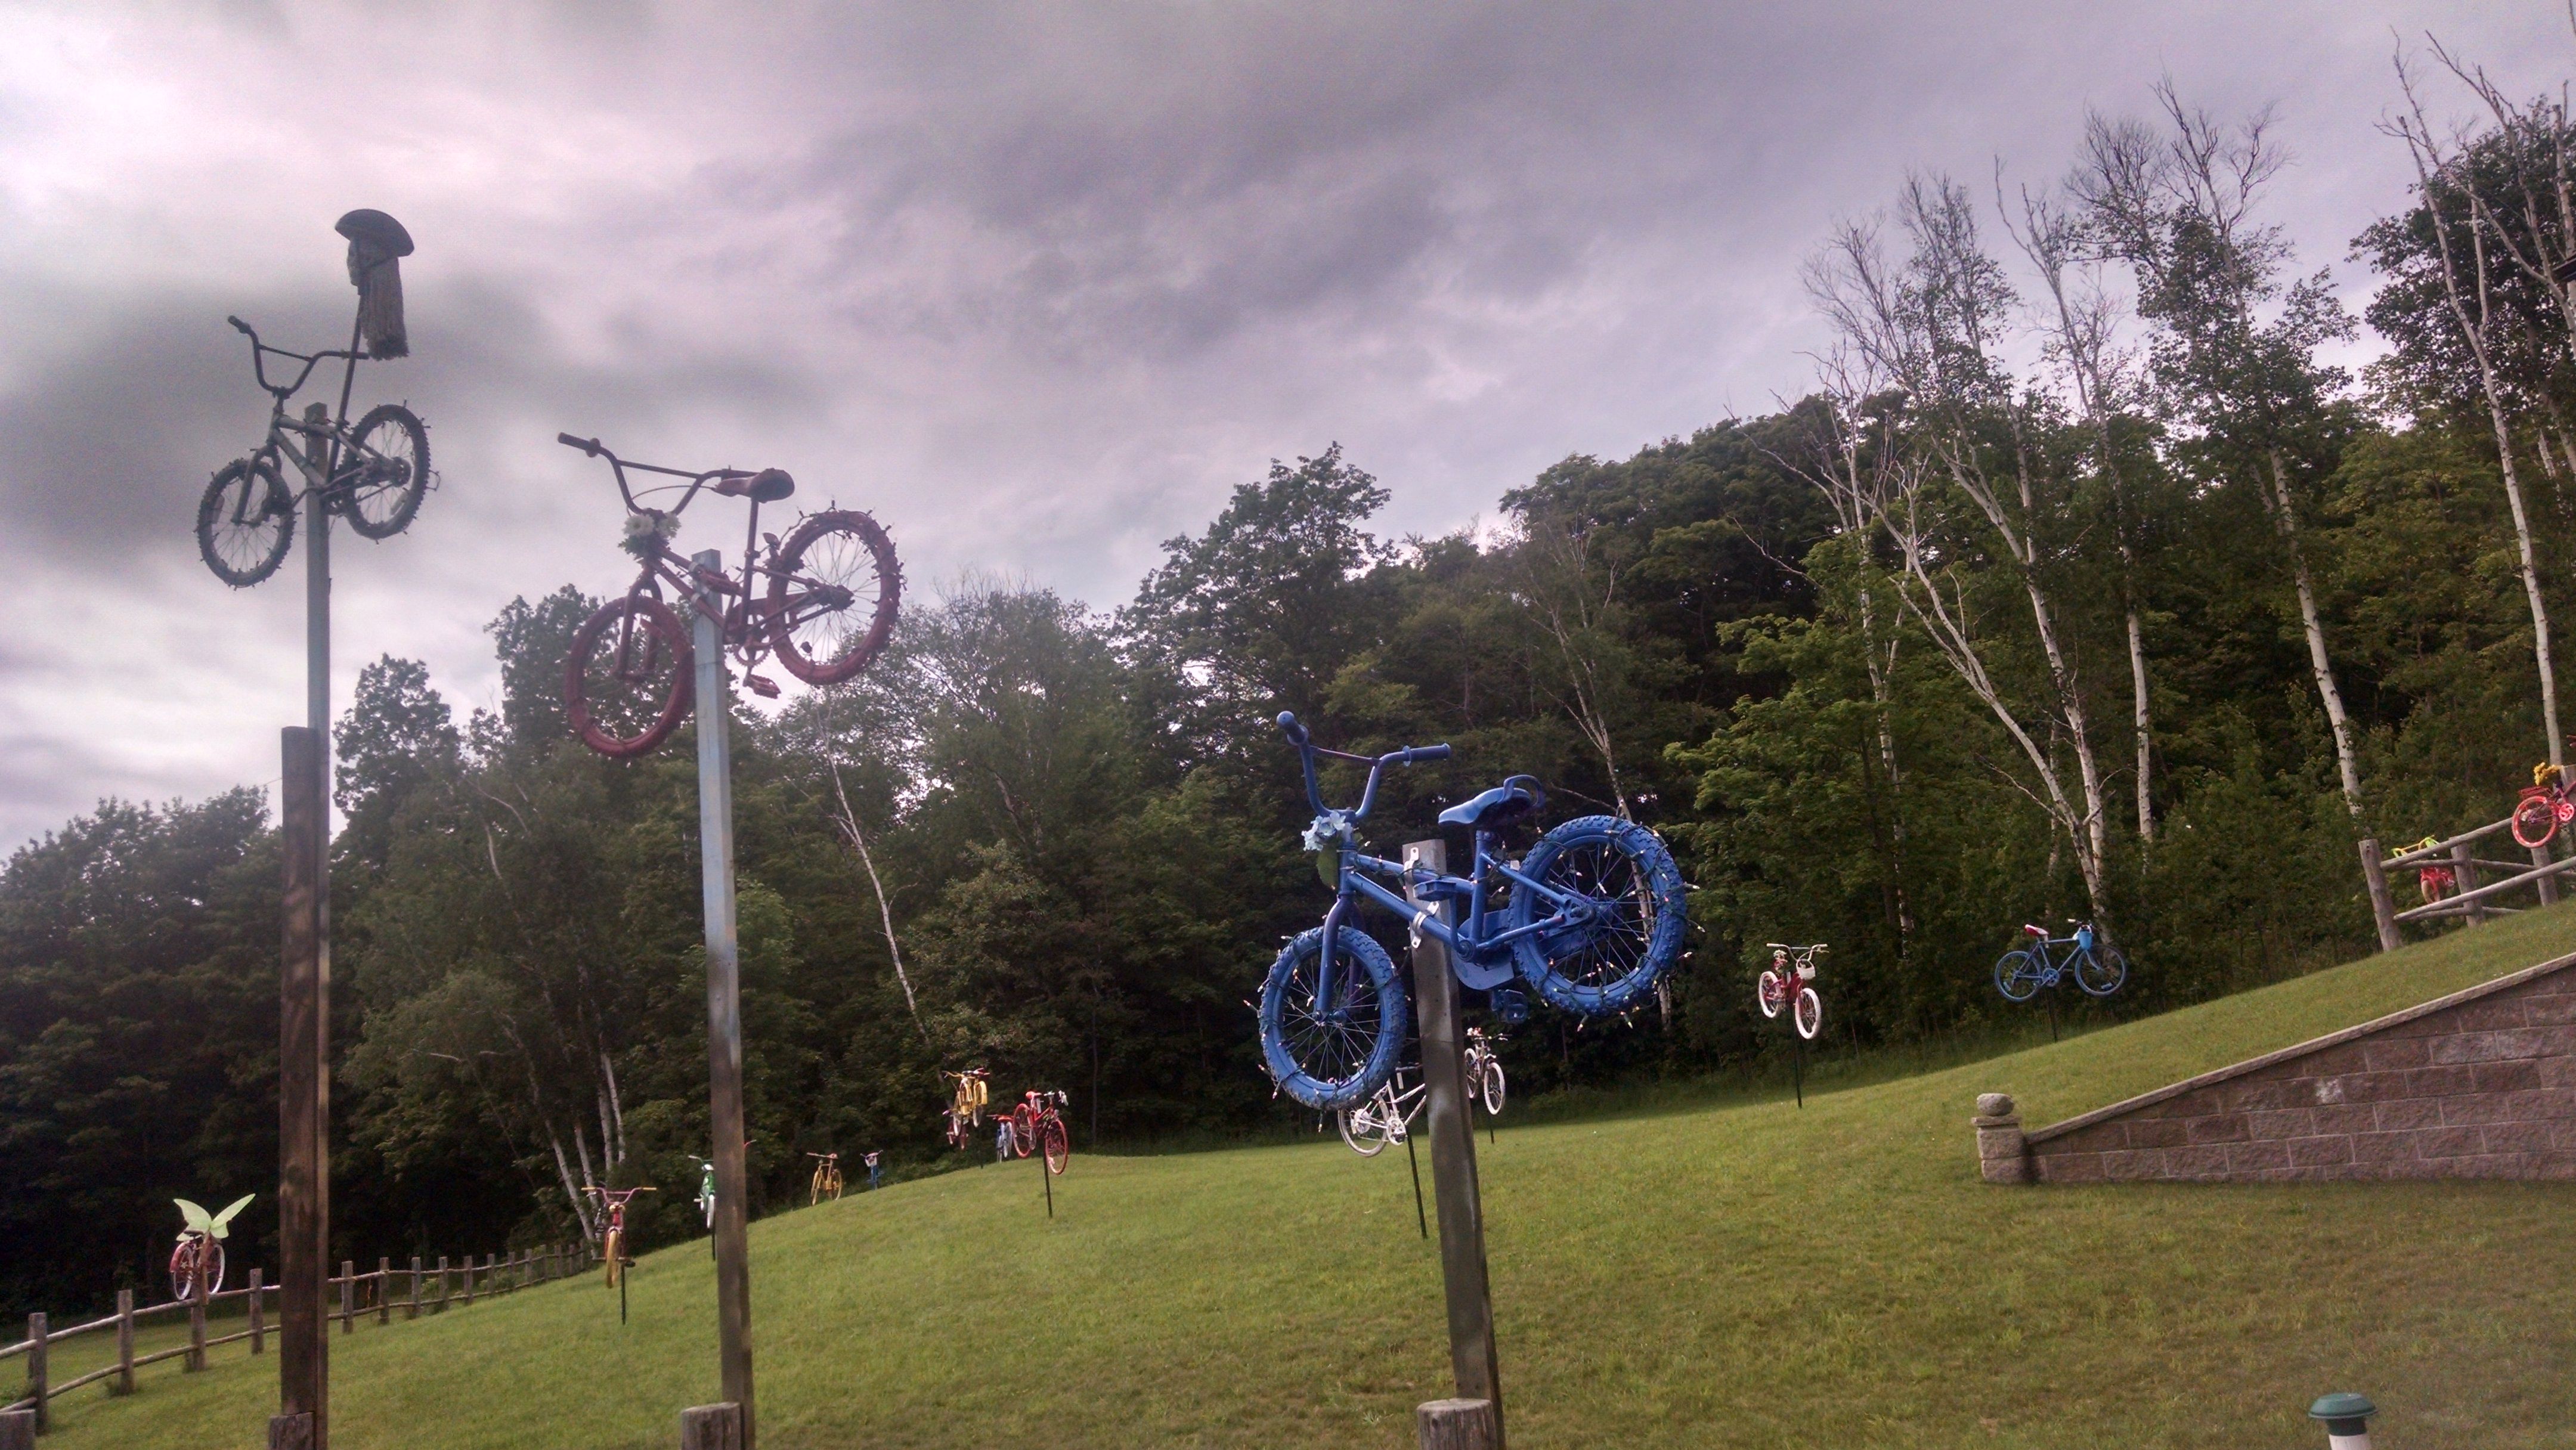 2015 Park Art - Bicycles